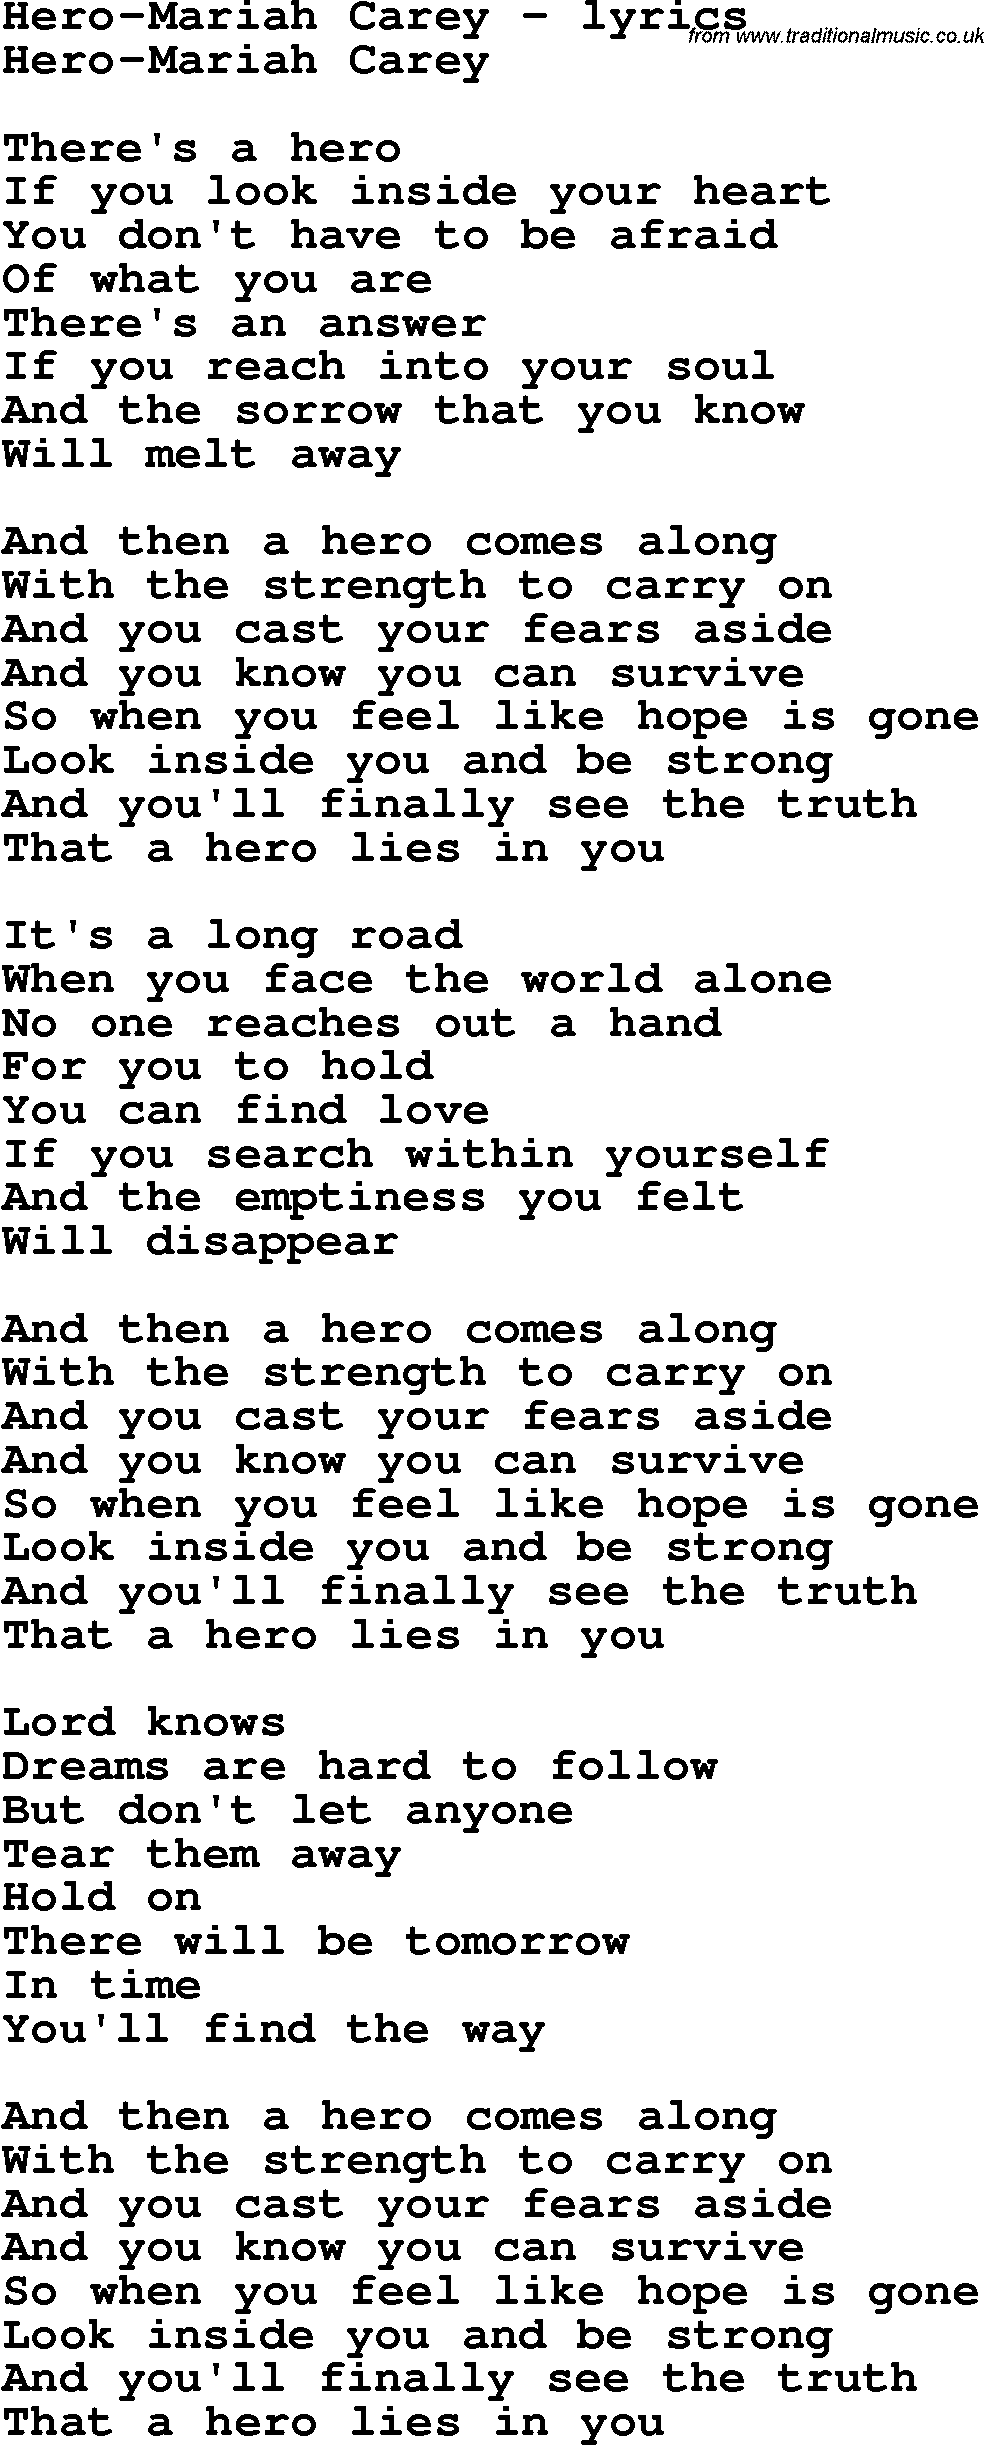 Love Song Lyrics for: Hero-Mariah Carey